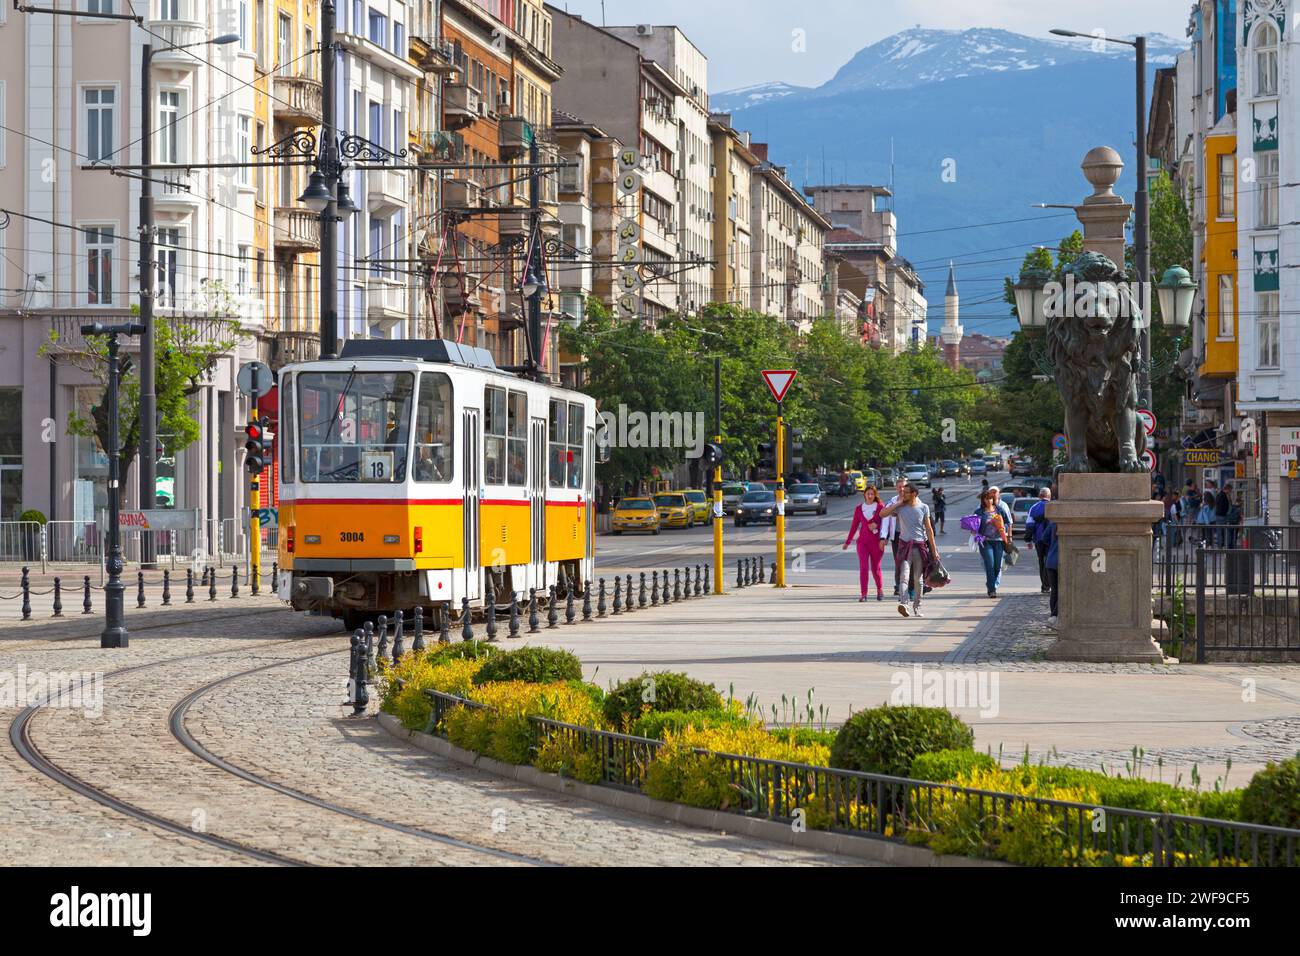 Sofia, Bulgaria - May 18 2019: The Sofia tram network is a main public transportation facility in the Bulgarian capital city. Stock Photo